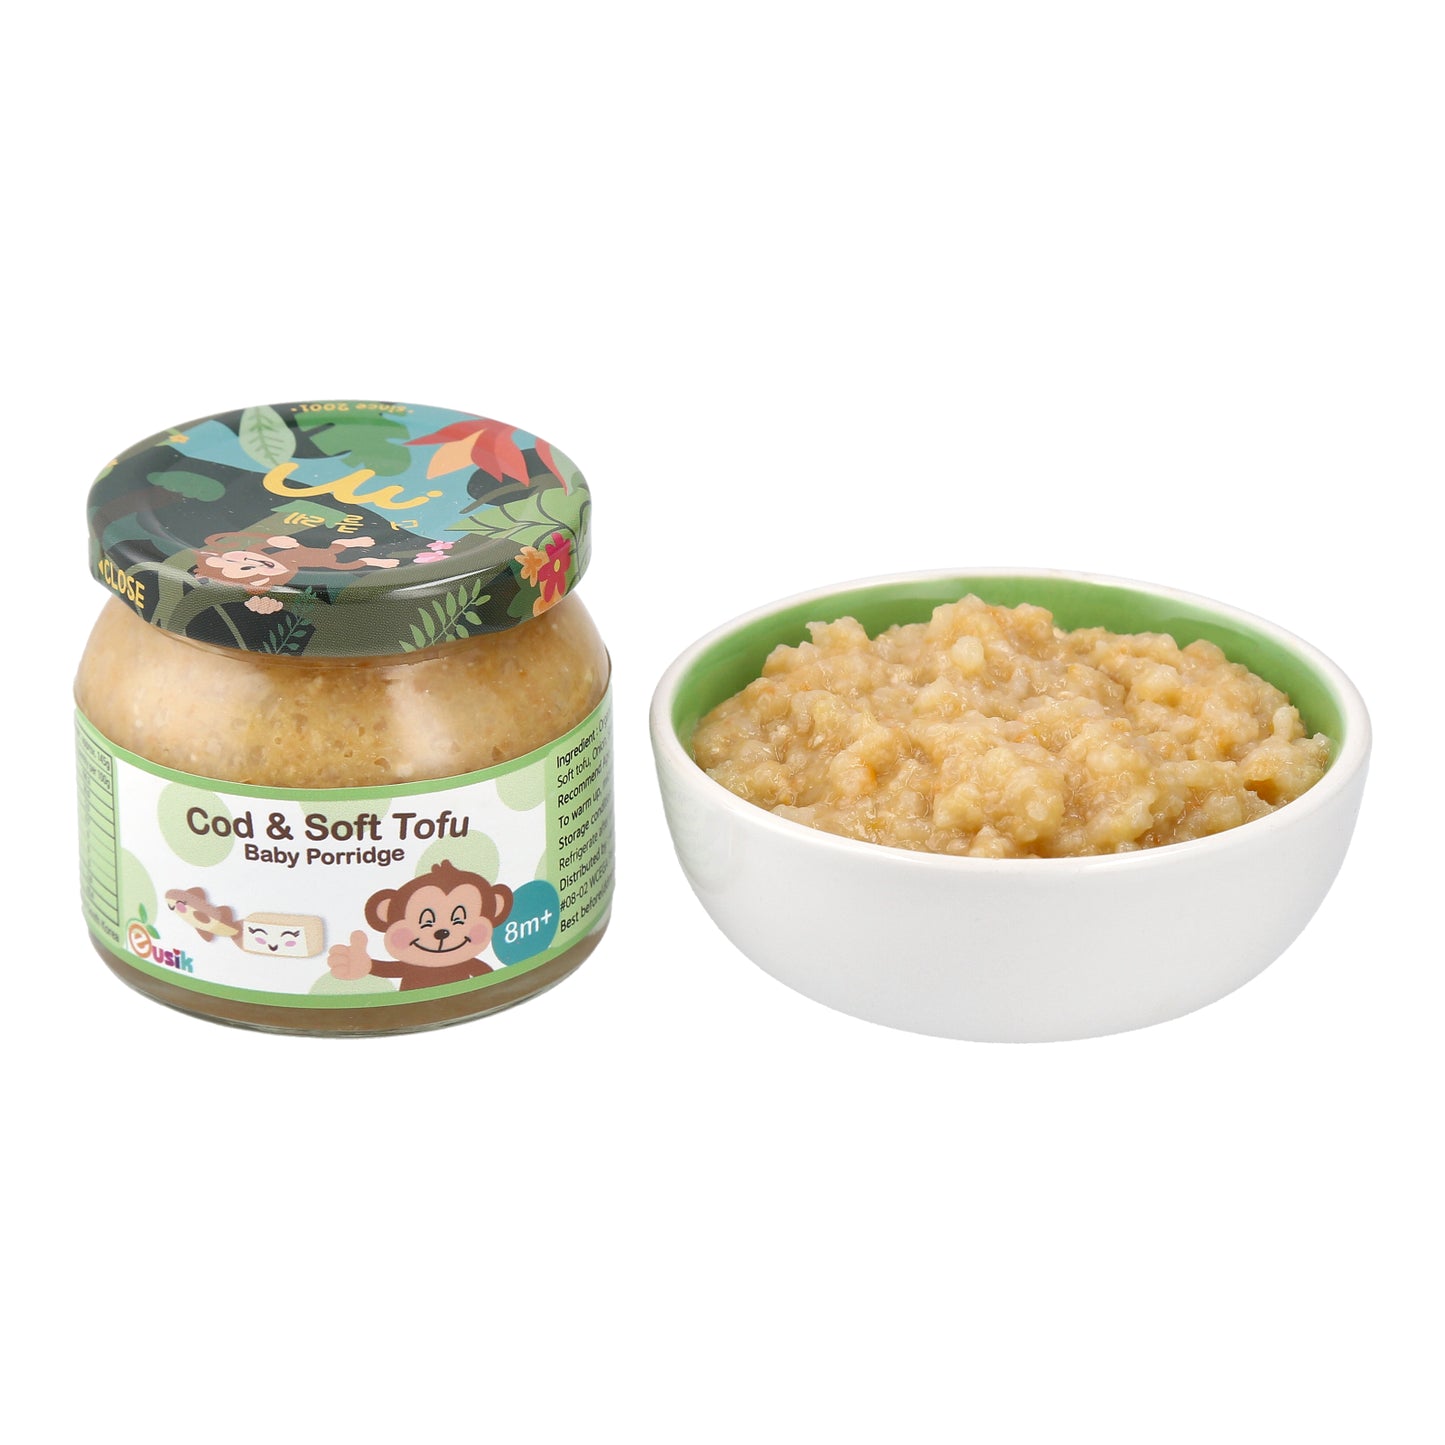 Eusik - 8-Pk Baby Rice Porridge (Cod & Soft Tofu) 145g, 8mths+